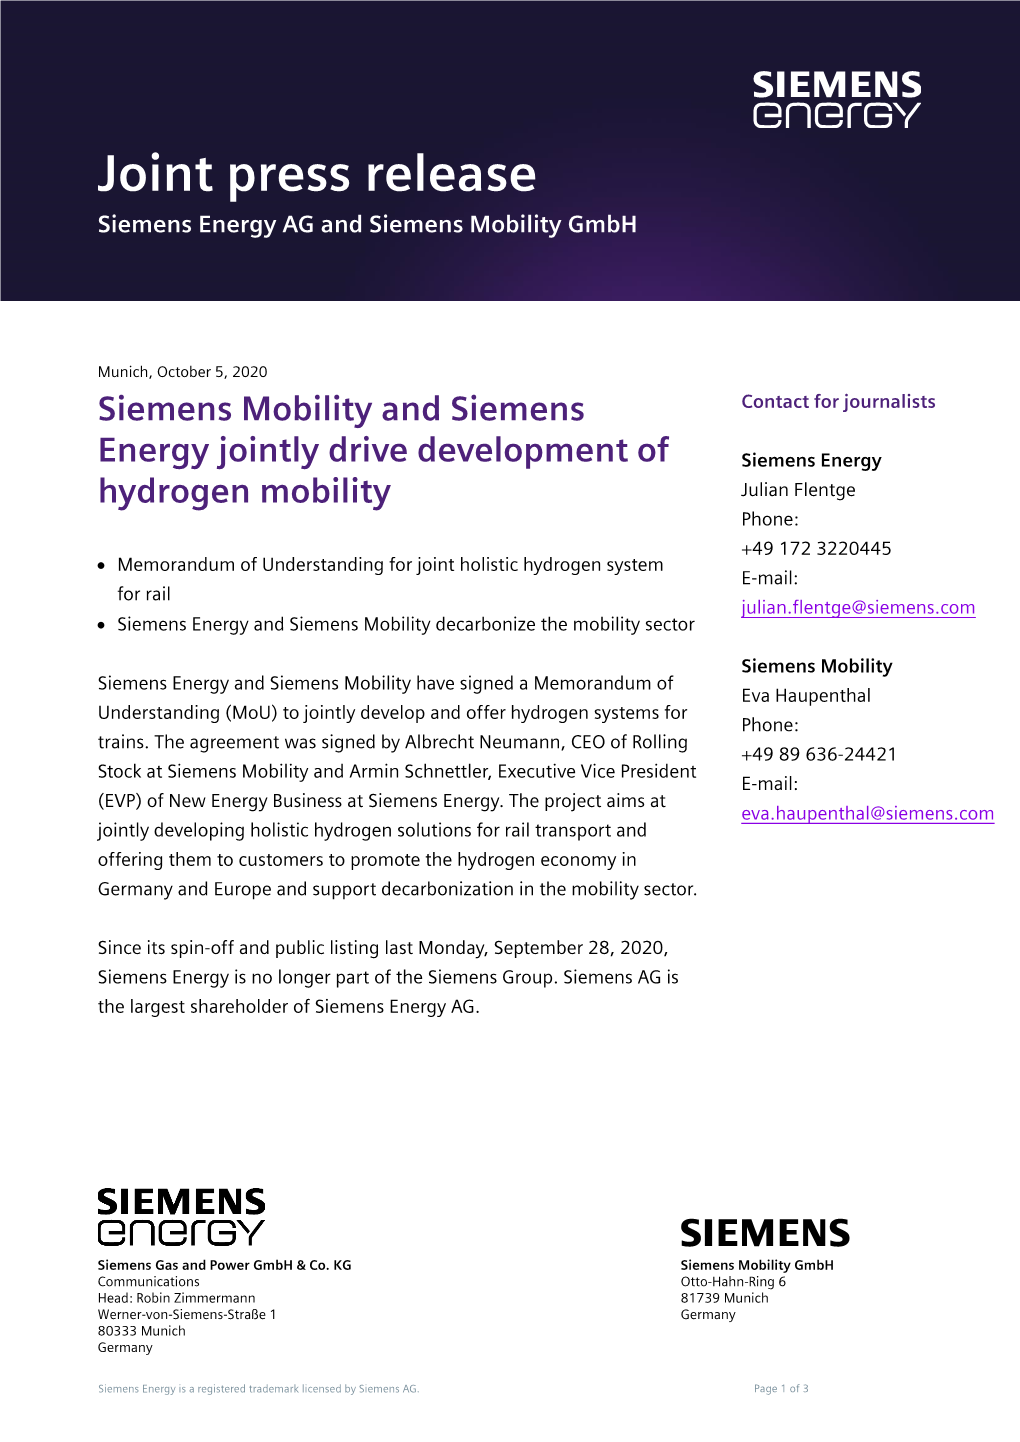 Siemens Energy Press Release